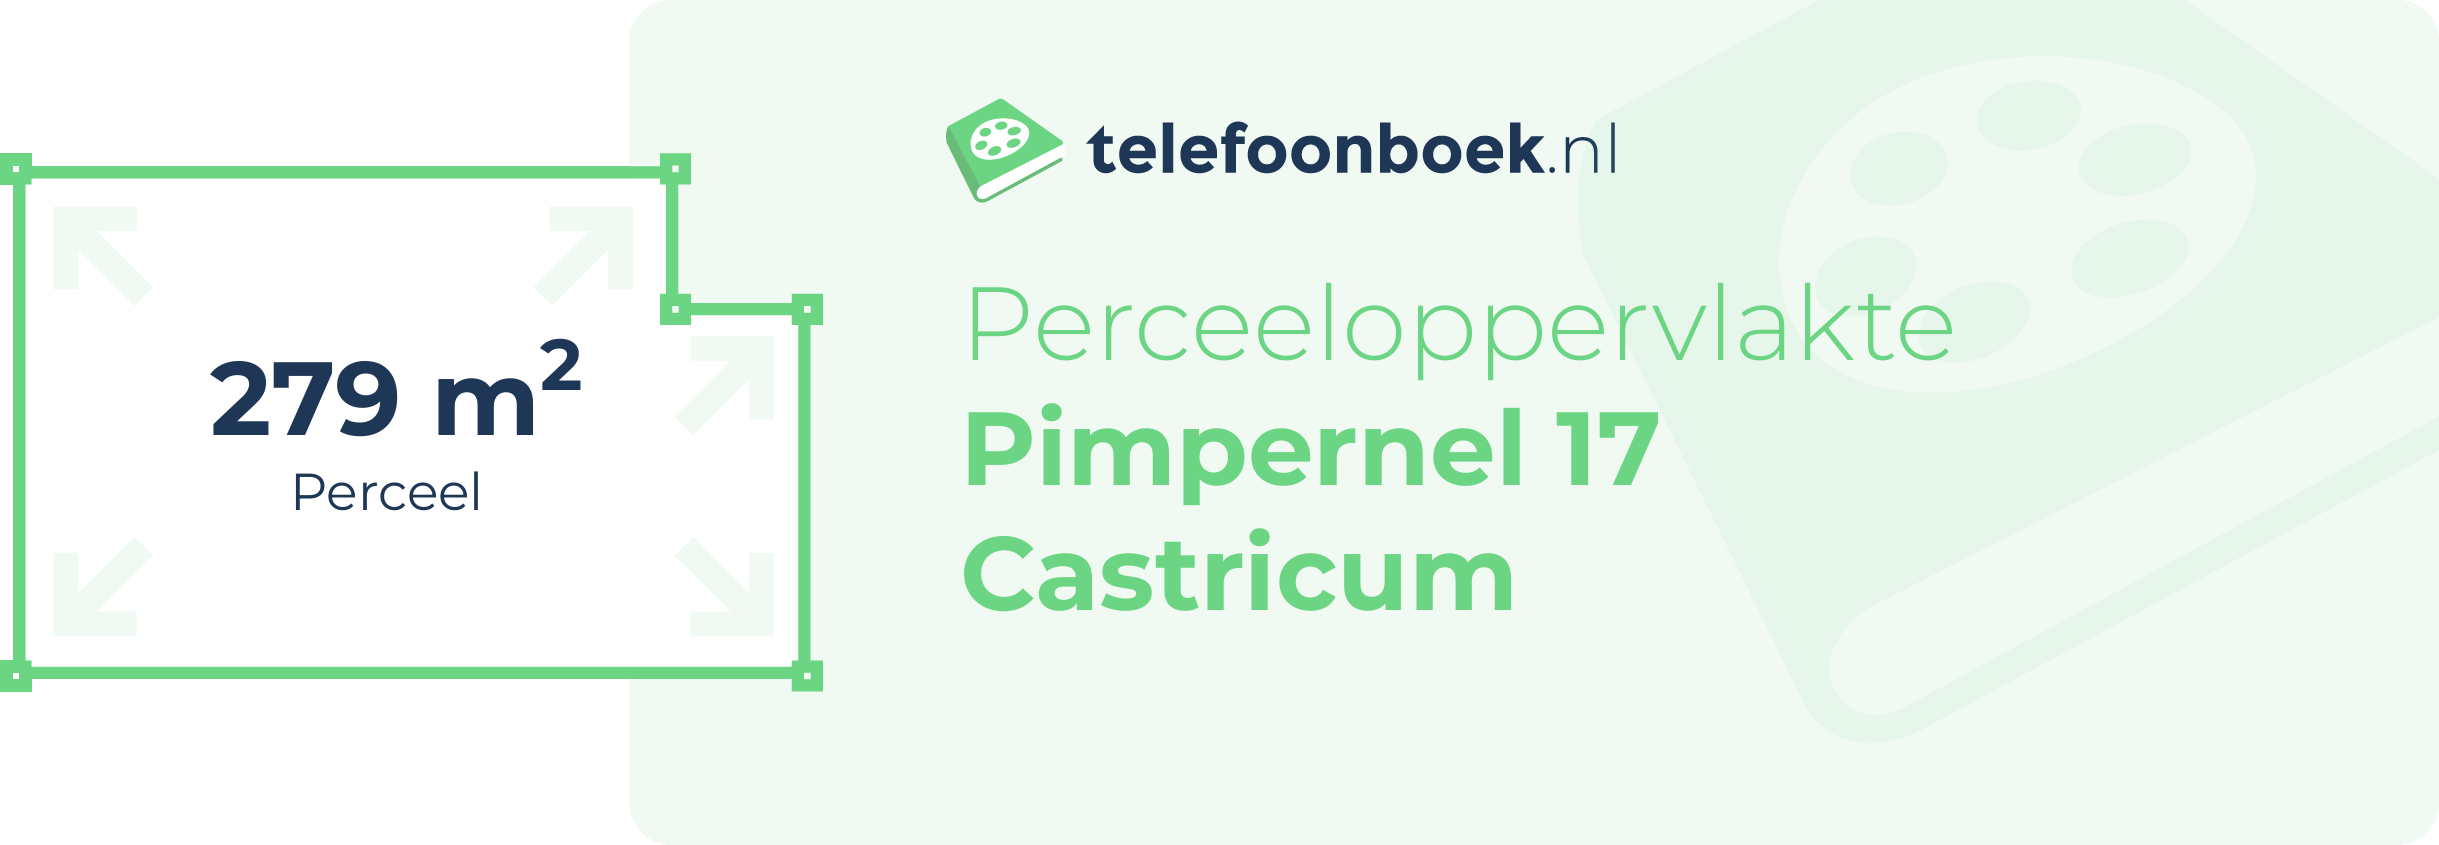 Perceeloppervlakte Pimpernel 17 Castricum